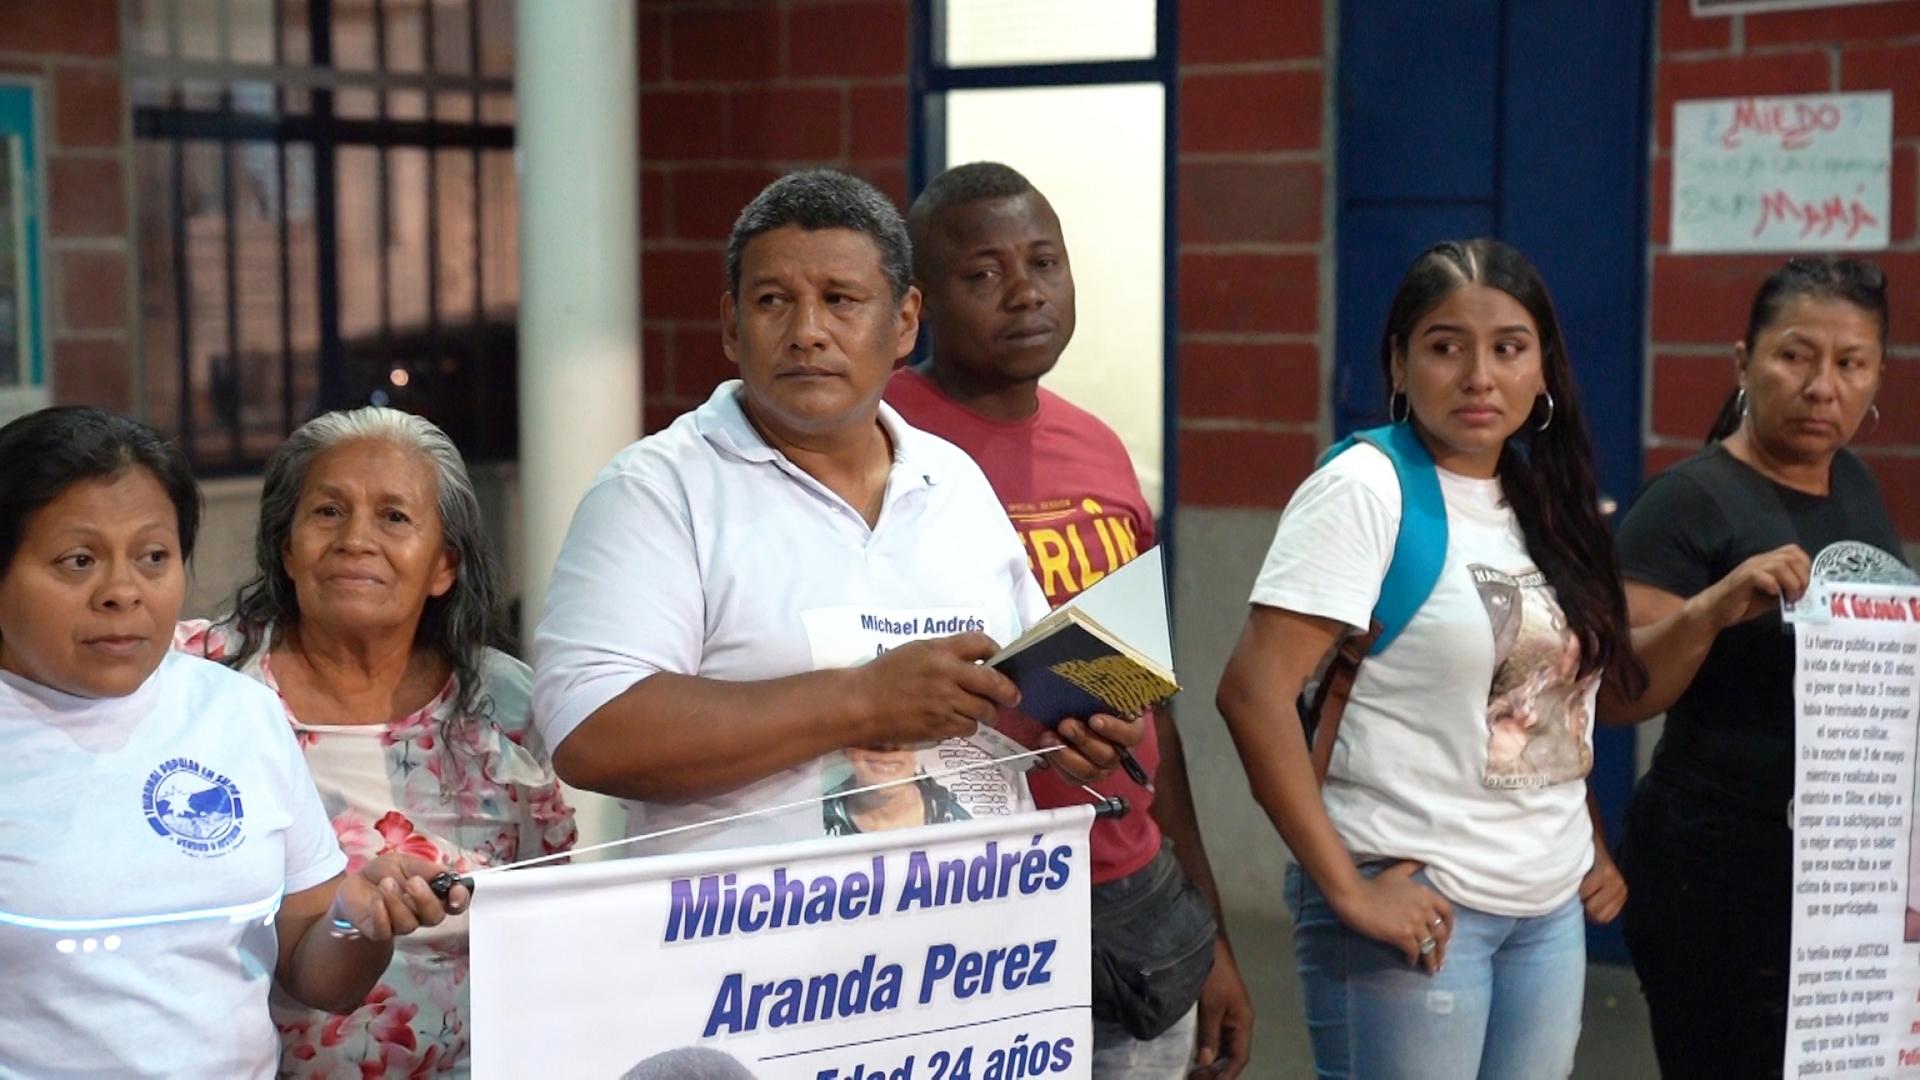 Abelardo Aranda attends the inauguration of the Siloe People's tribunal in Cali